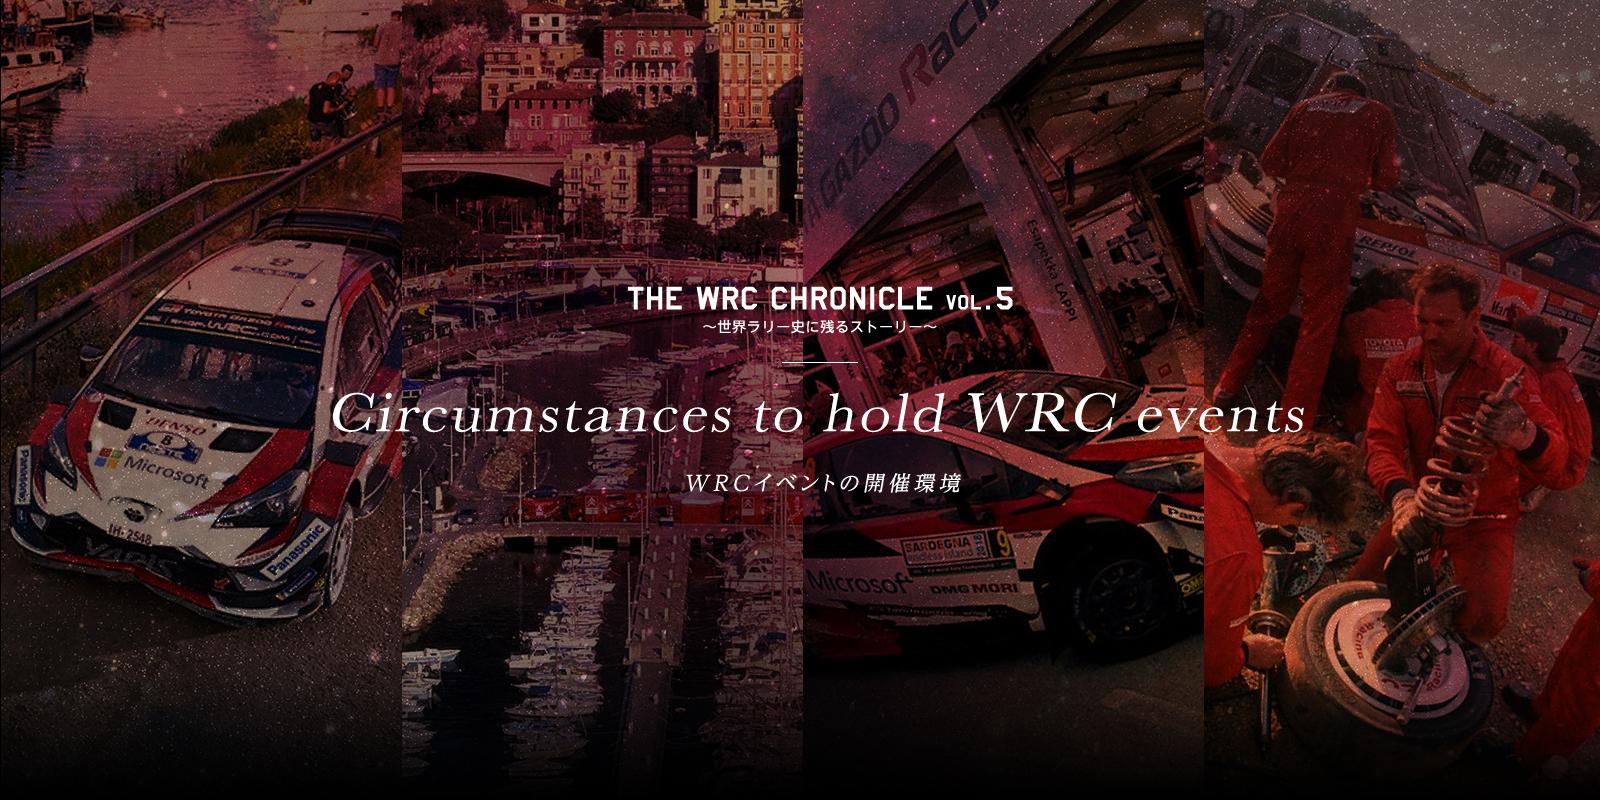 Circumstances to hold WRC events 〜WRCイベントの開催環境〜 | The WRC Chronicle vol.5